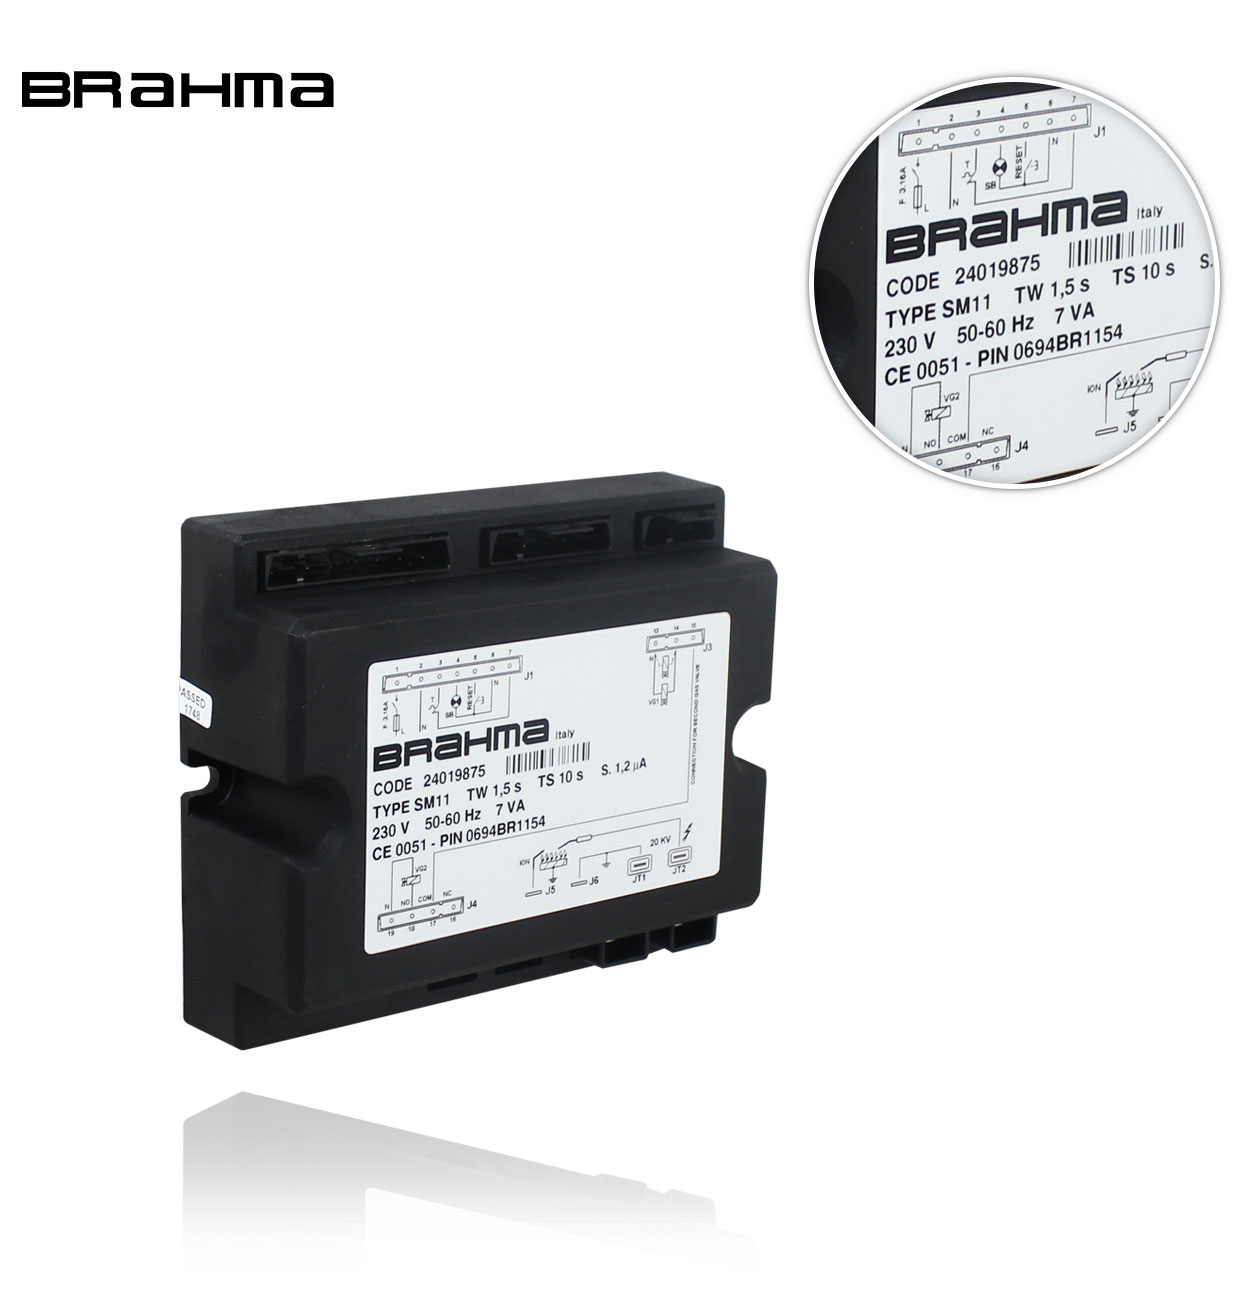 SM 11 TW1.5 TS10 BRAHMA EUROFLAT GAS CONTROL BOX